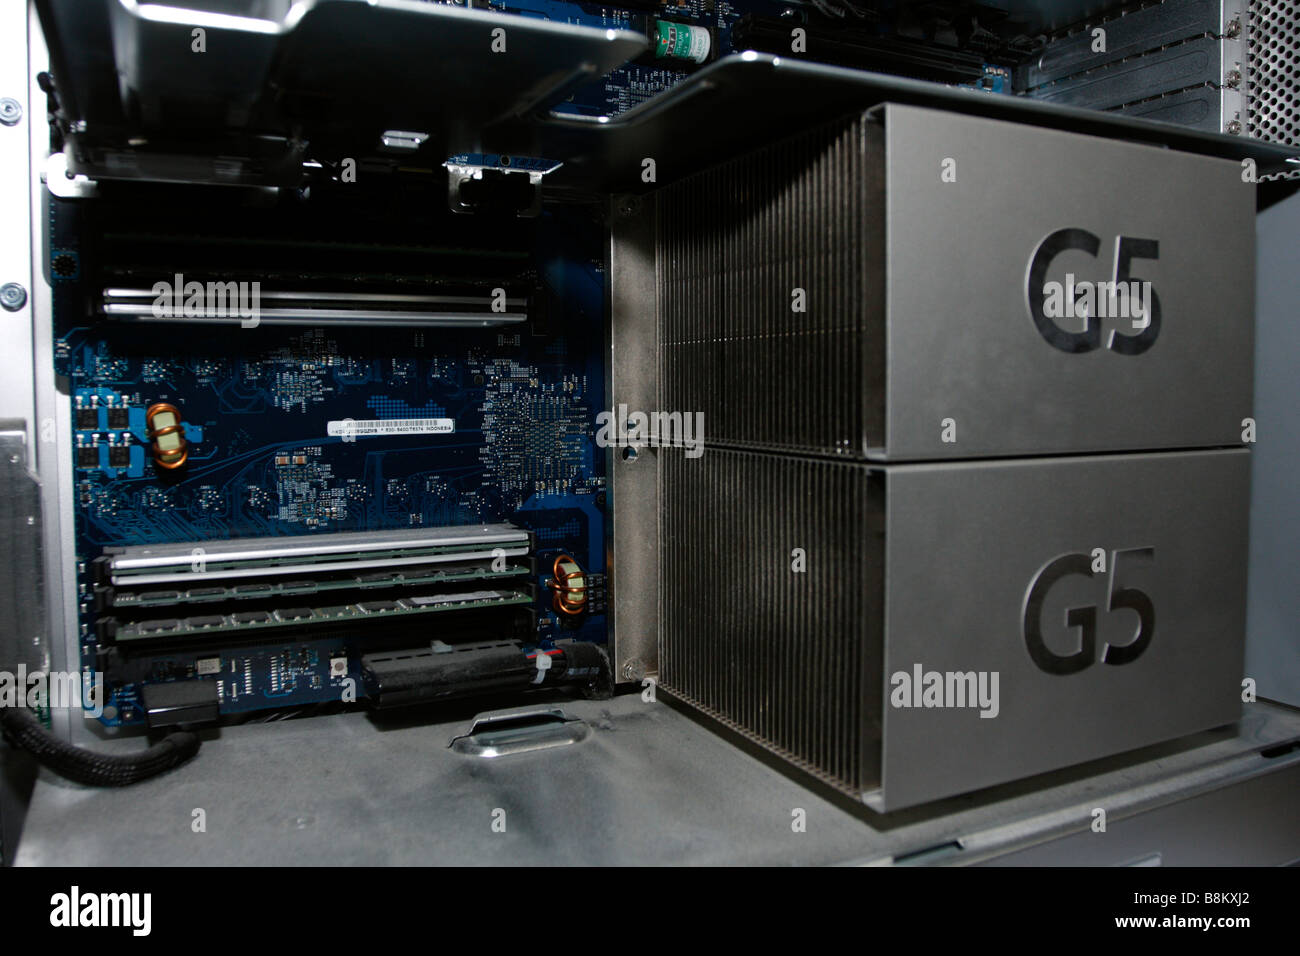 Slot per ram di una mela powermac g5 immagini e fotografie stock ad alta  risoluzione - Alamy